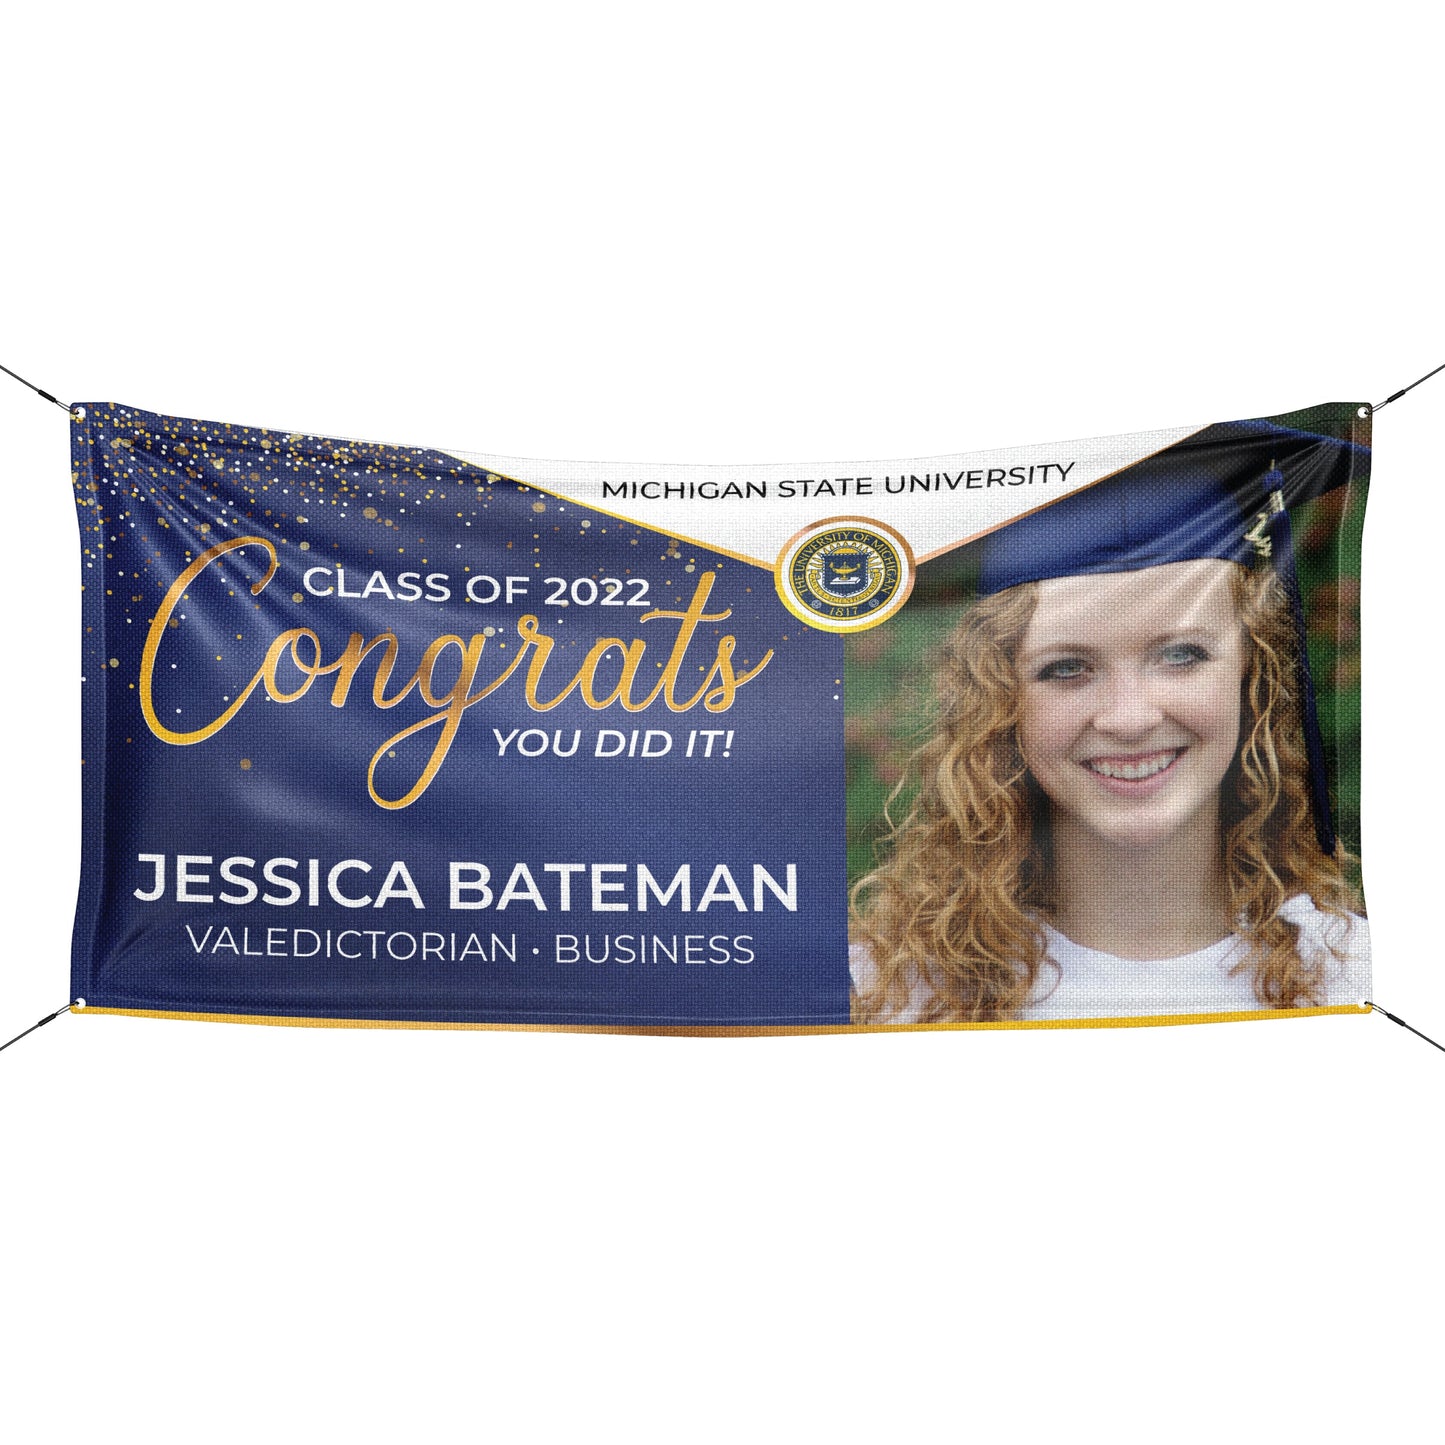 Personalized Congrats Graduation Banner